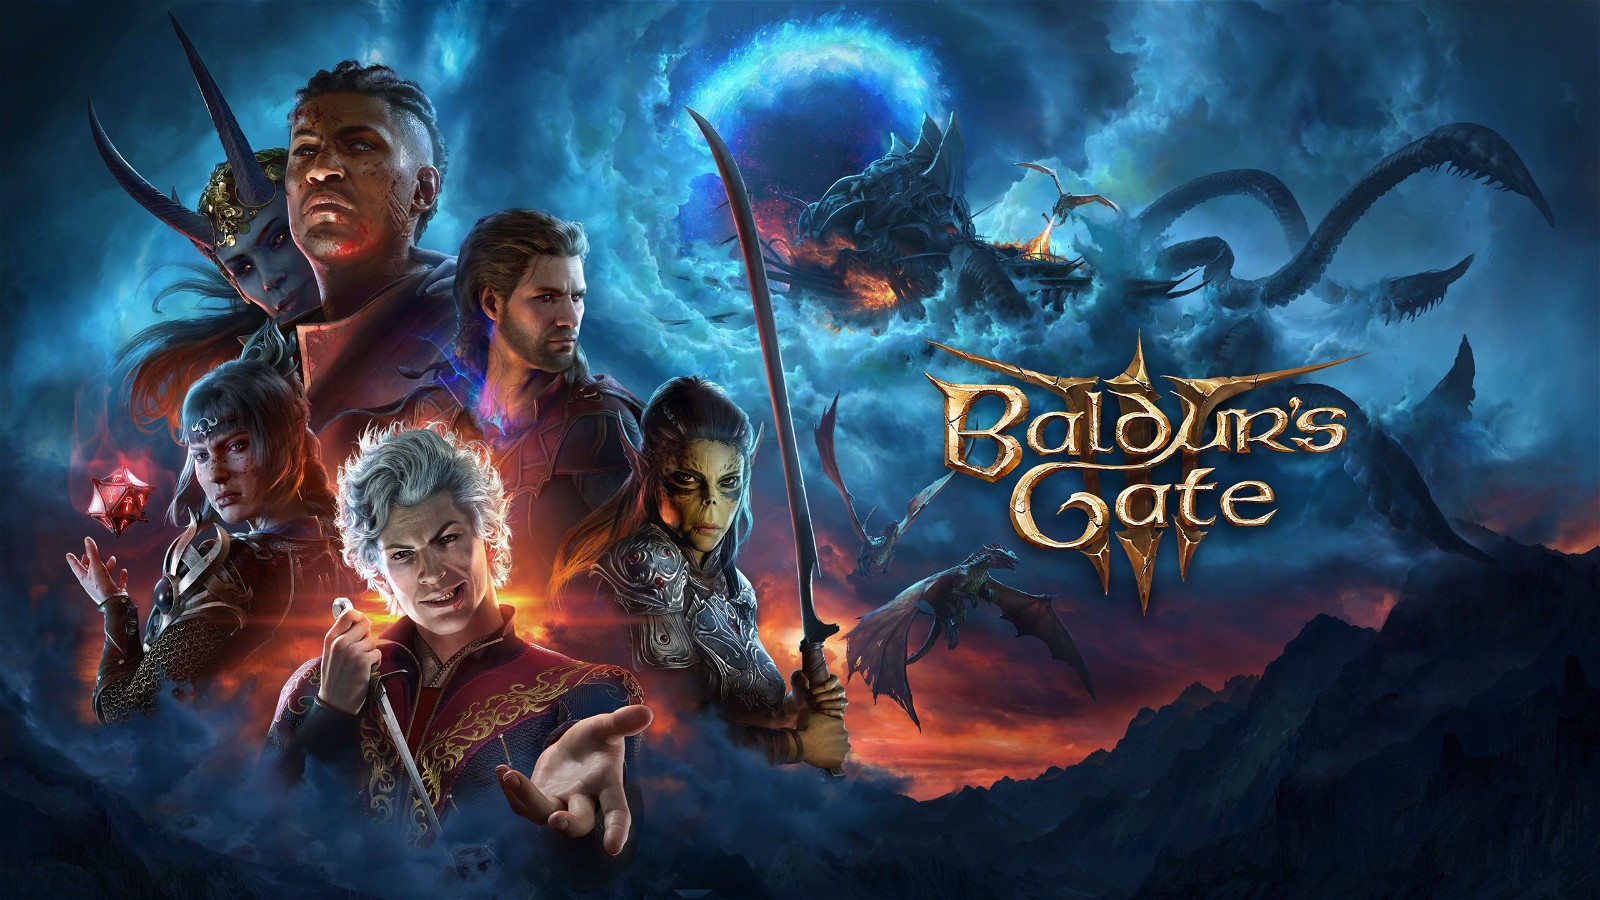 The studio behind Baldur's Gate 3 announces expansion to Warsaw, Poland.